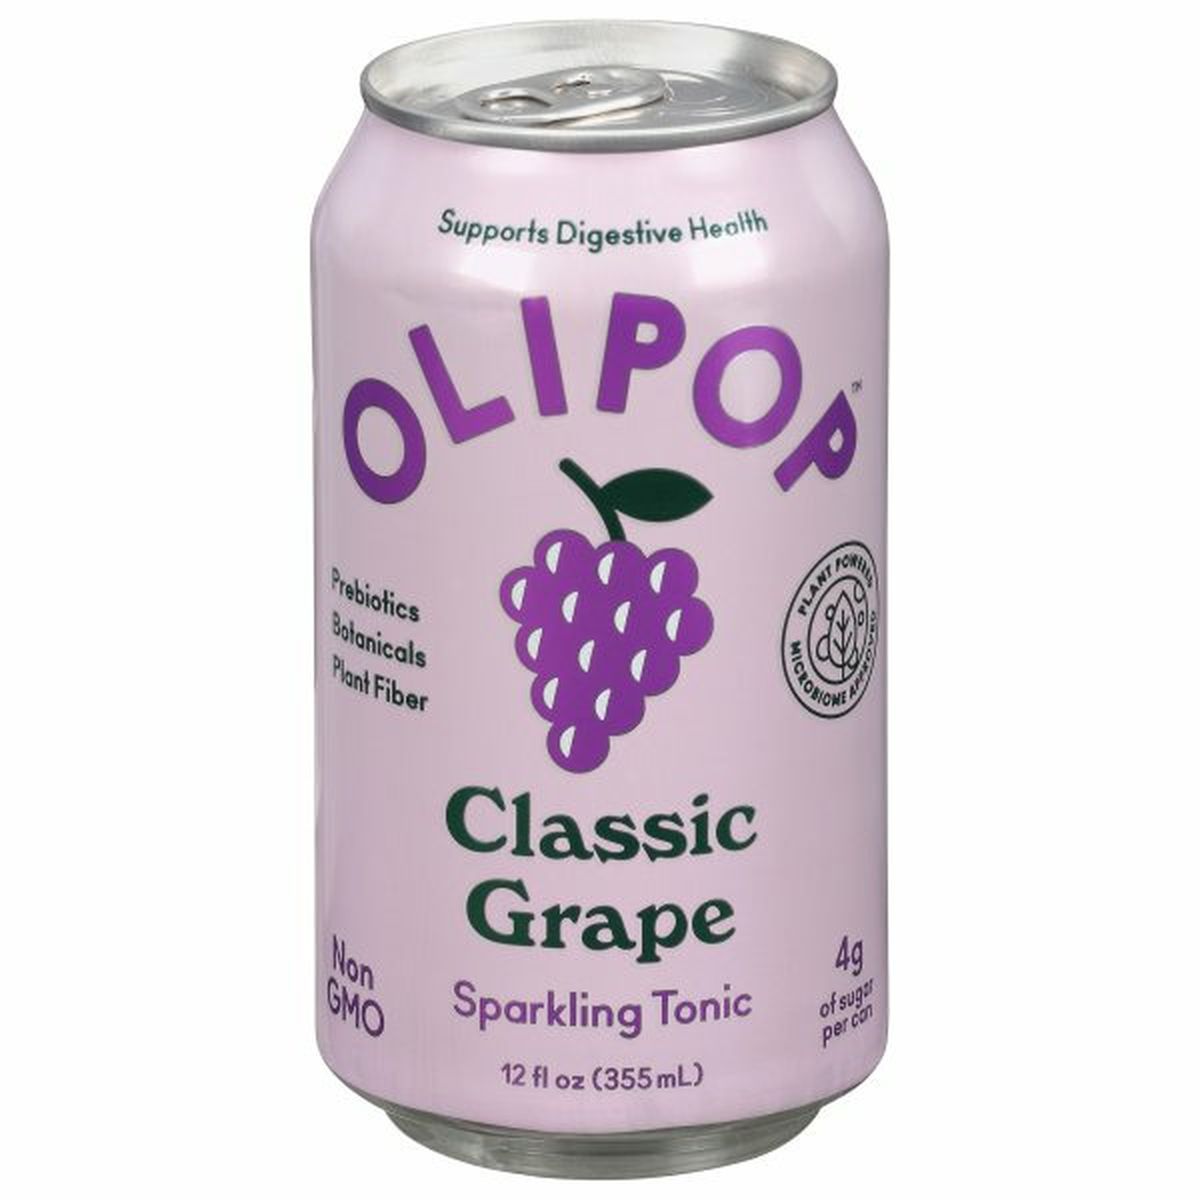 Calories in Olipop Sparkling Tonic, Classic Grape